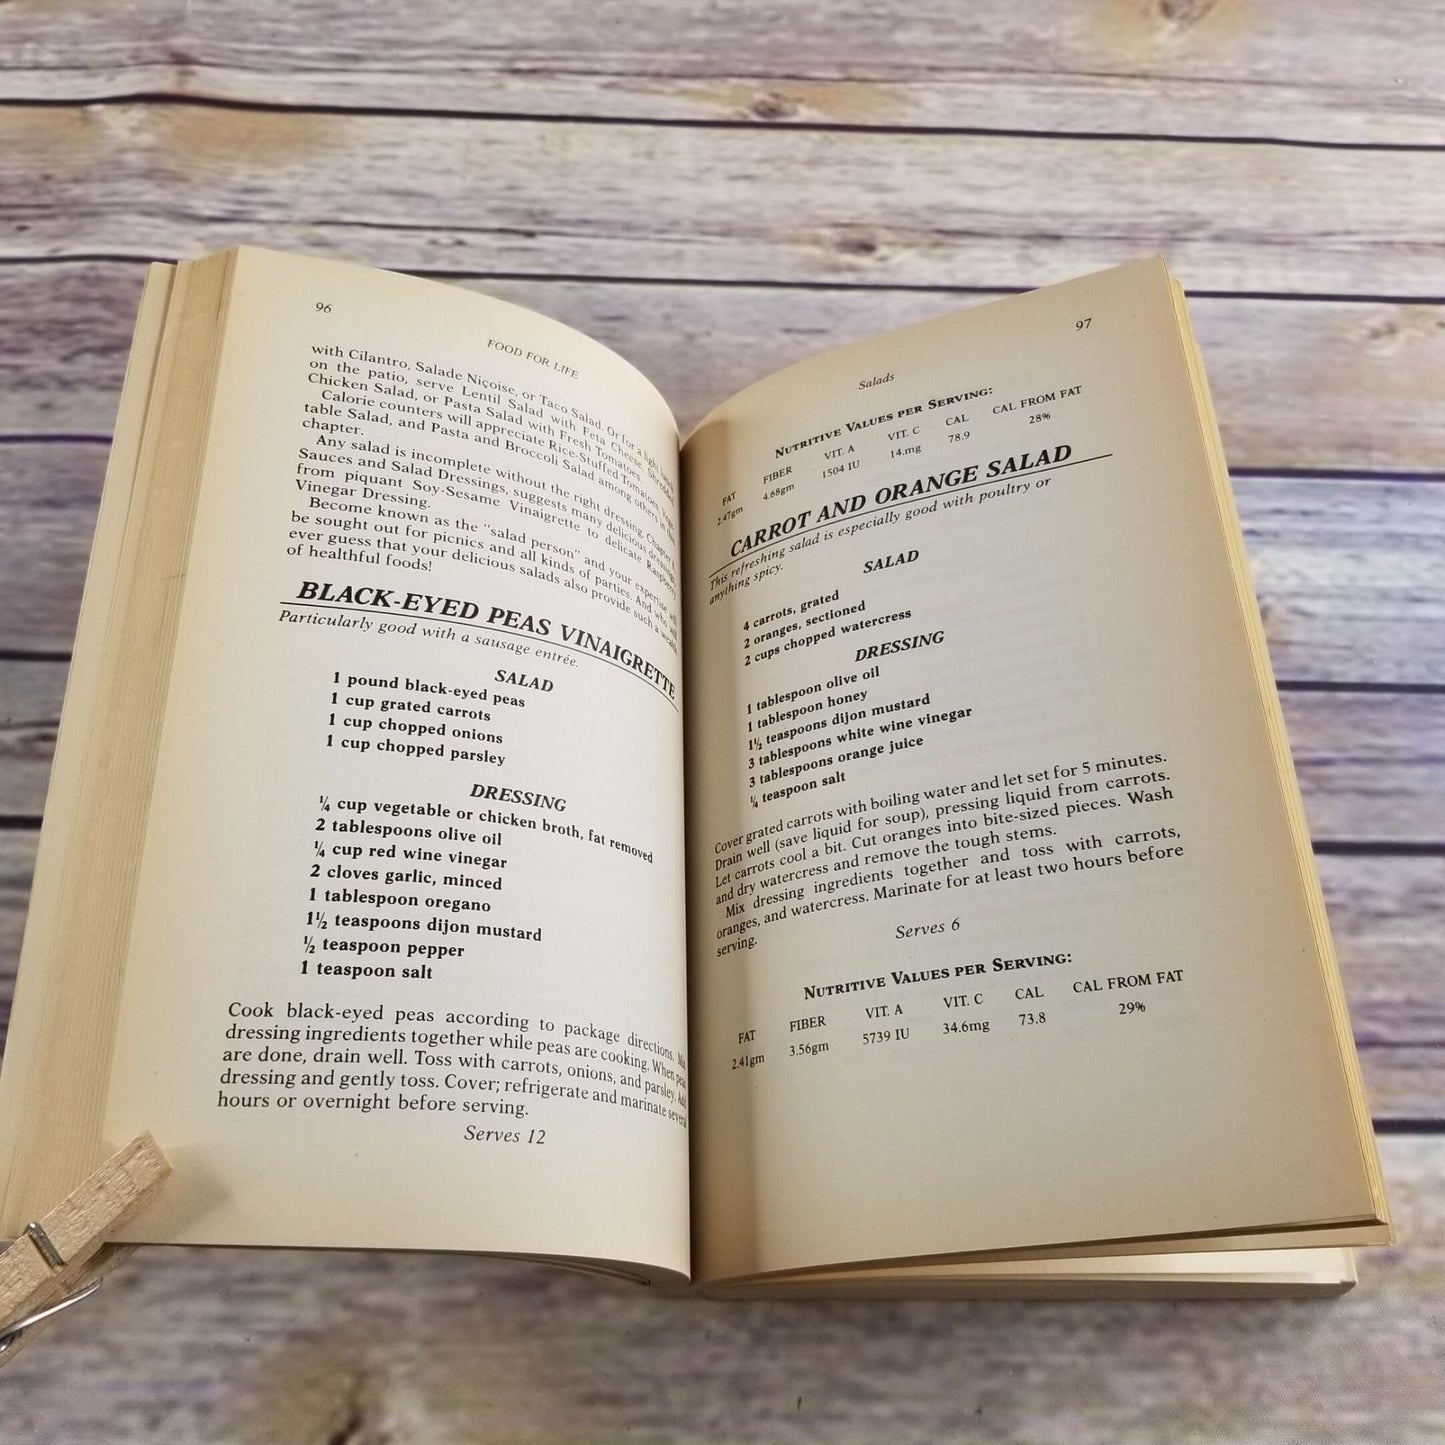 Vintage Cook Book Food For Life The Cancer Prevention Cookbook Recipes 1986 Paperback Richard Bohannon MD